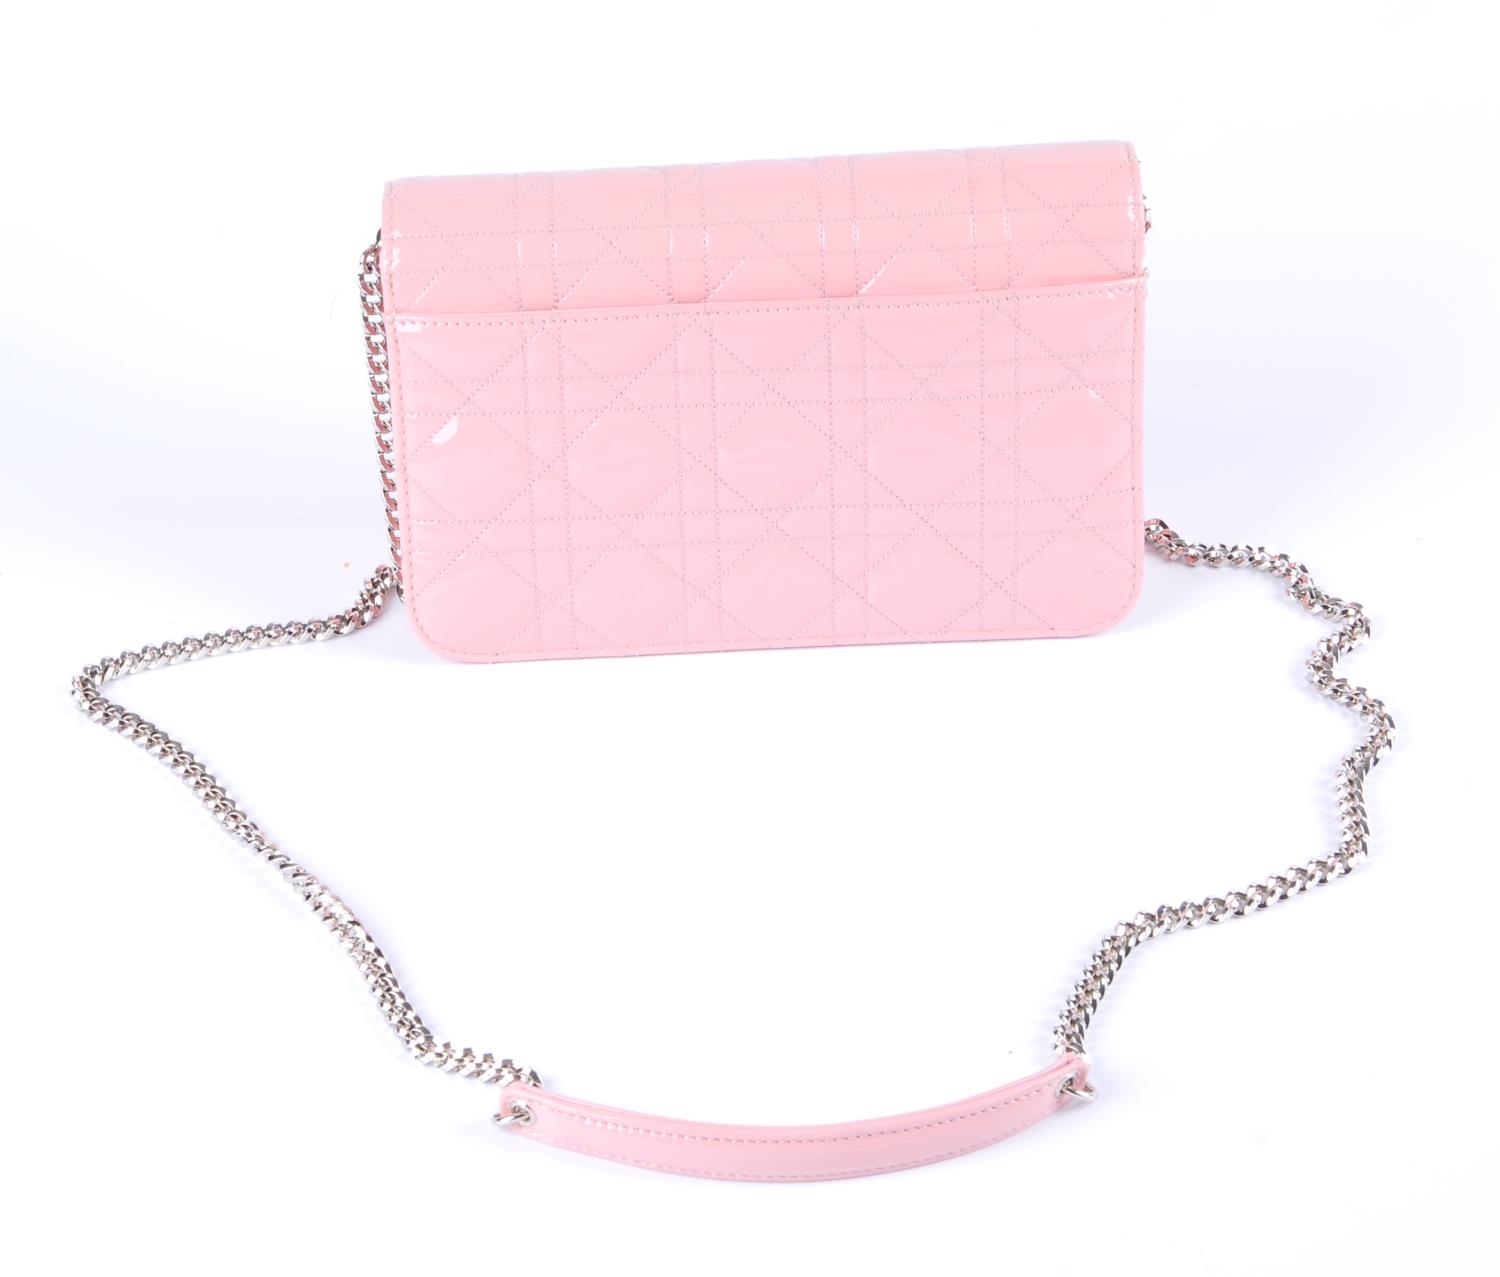 CHRISTIAN DIOR - a patent leather Miss Dior Promenade handbag. - Image 3 of 4